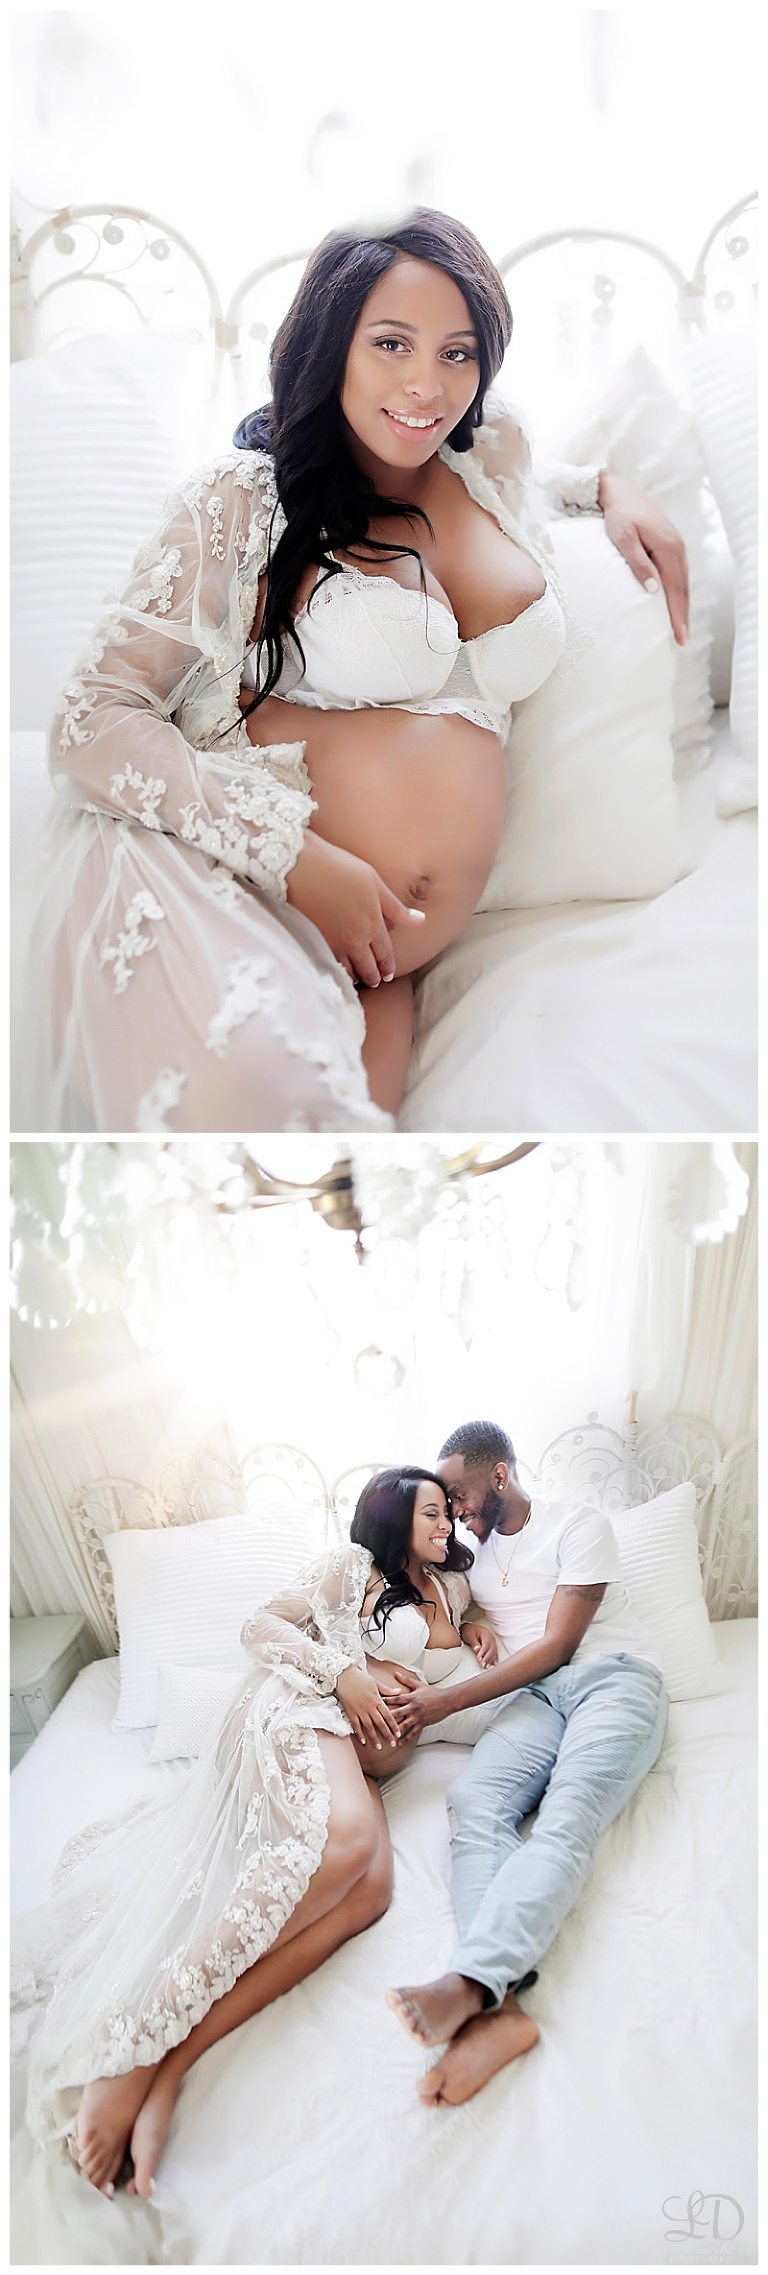 sweet maternity photoshoot-lori dorman photography-maternity boudoir-professional photographer_5023.jpg